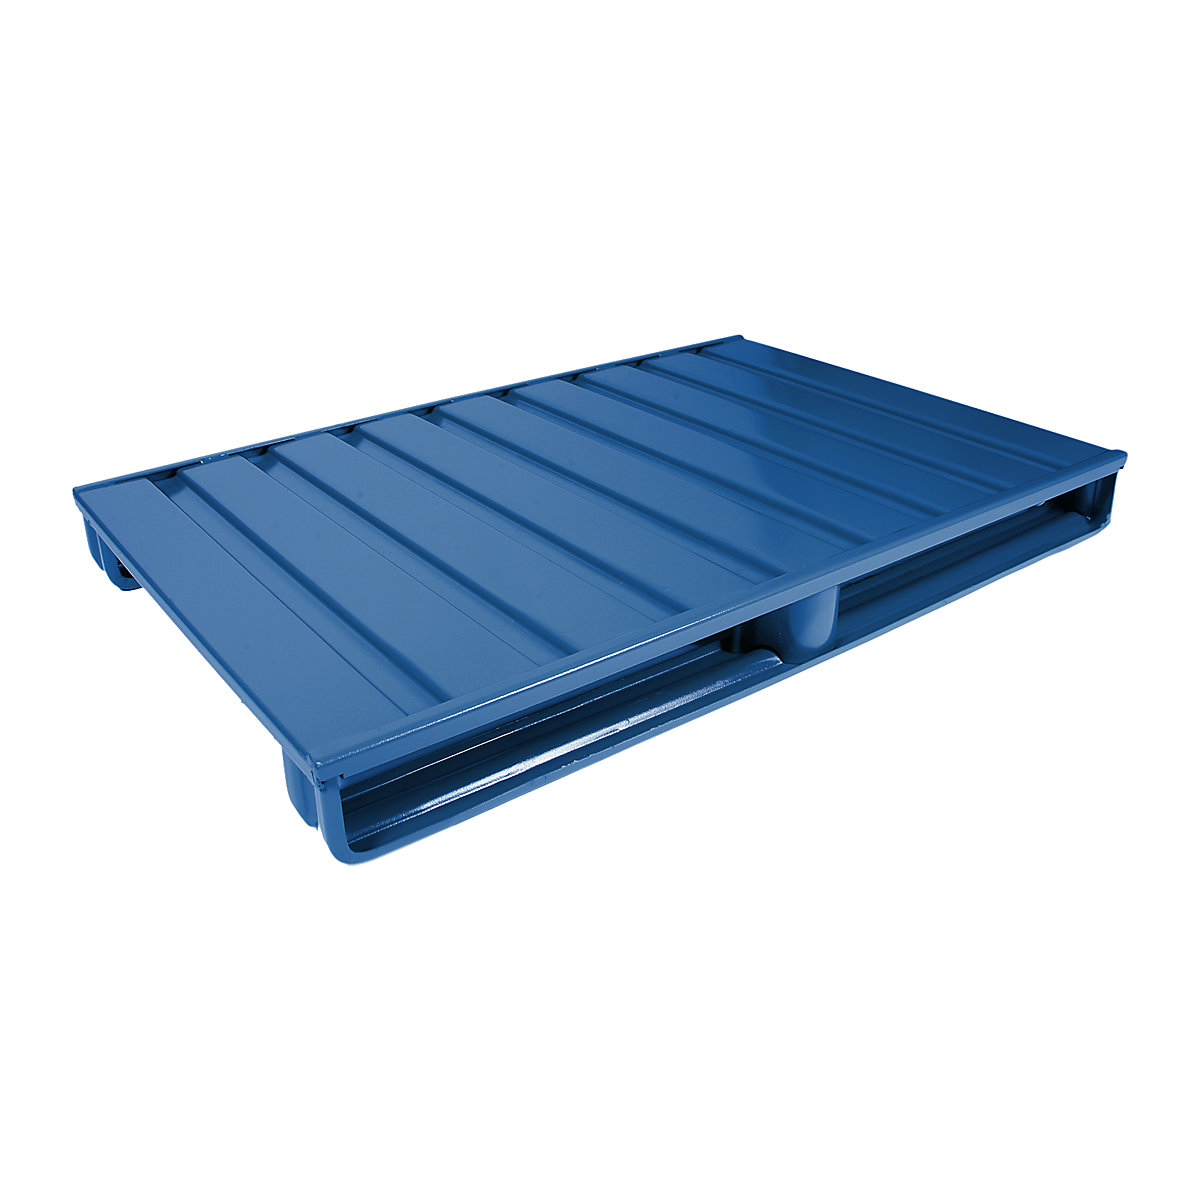 Flat steel pallet – Heson, LxW 1000 x 800 mm, max. load 2000 kg, gentian blue-4